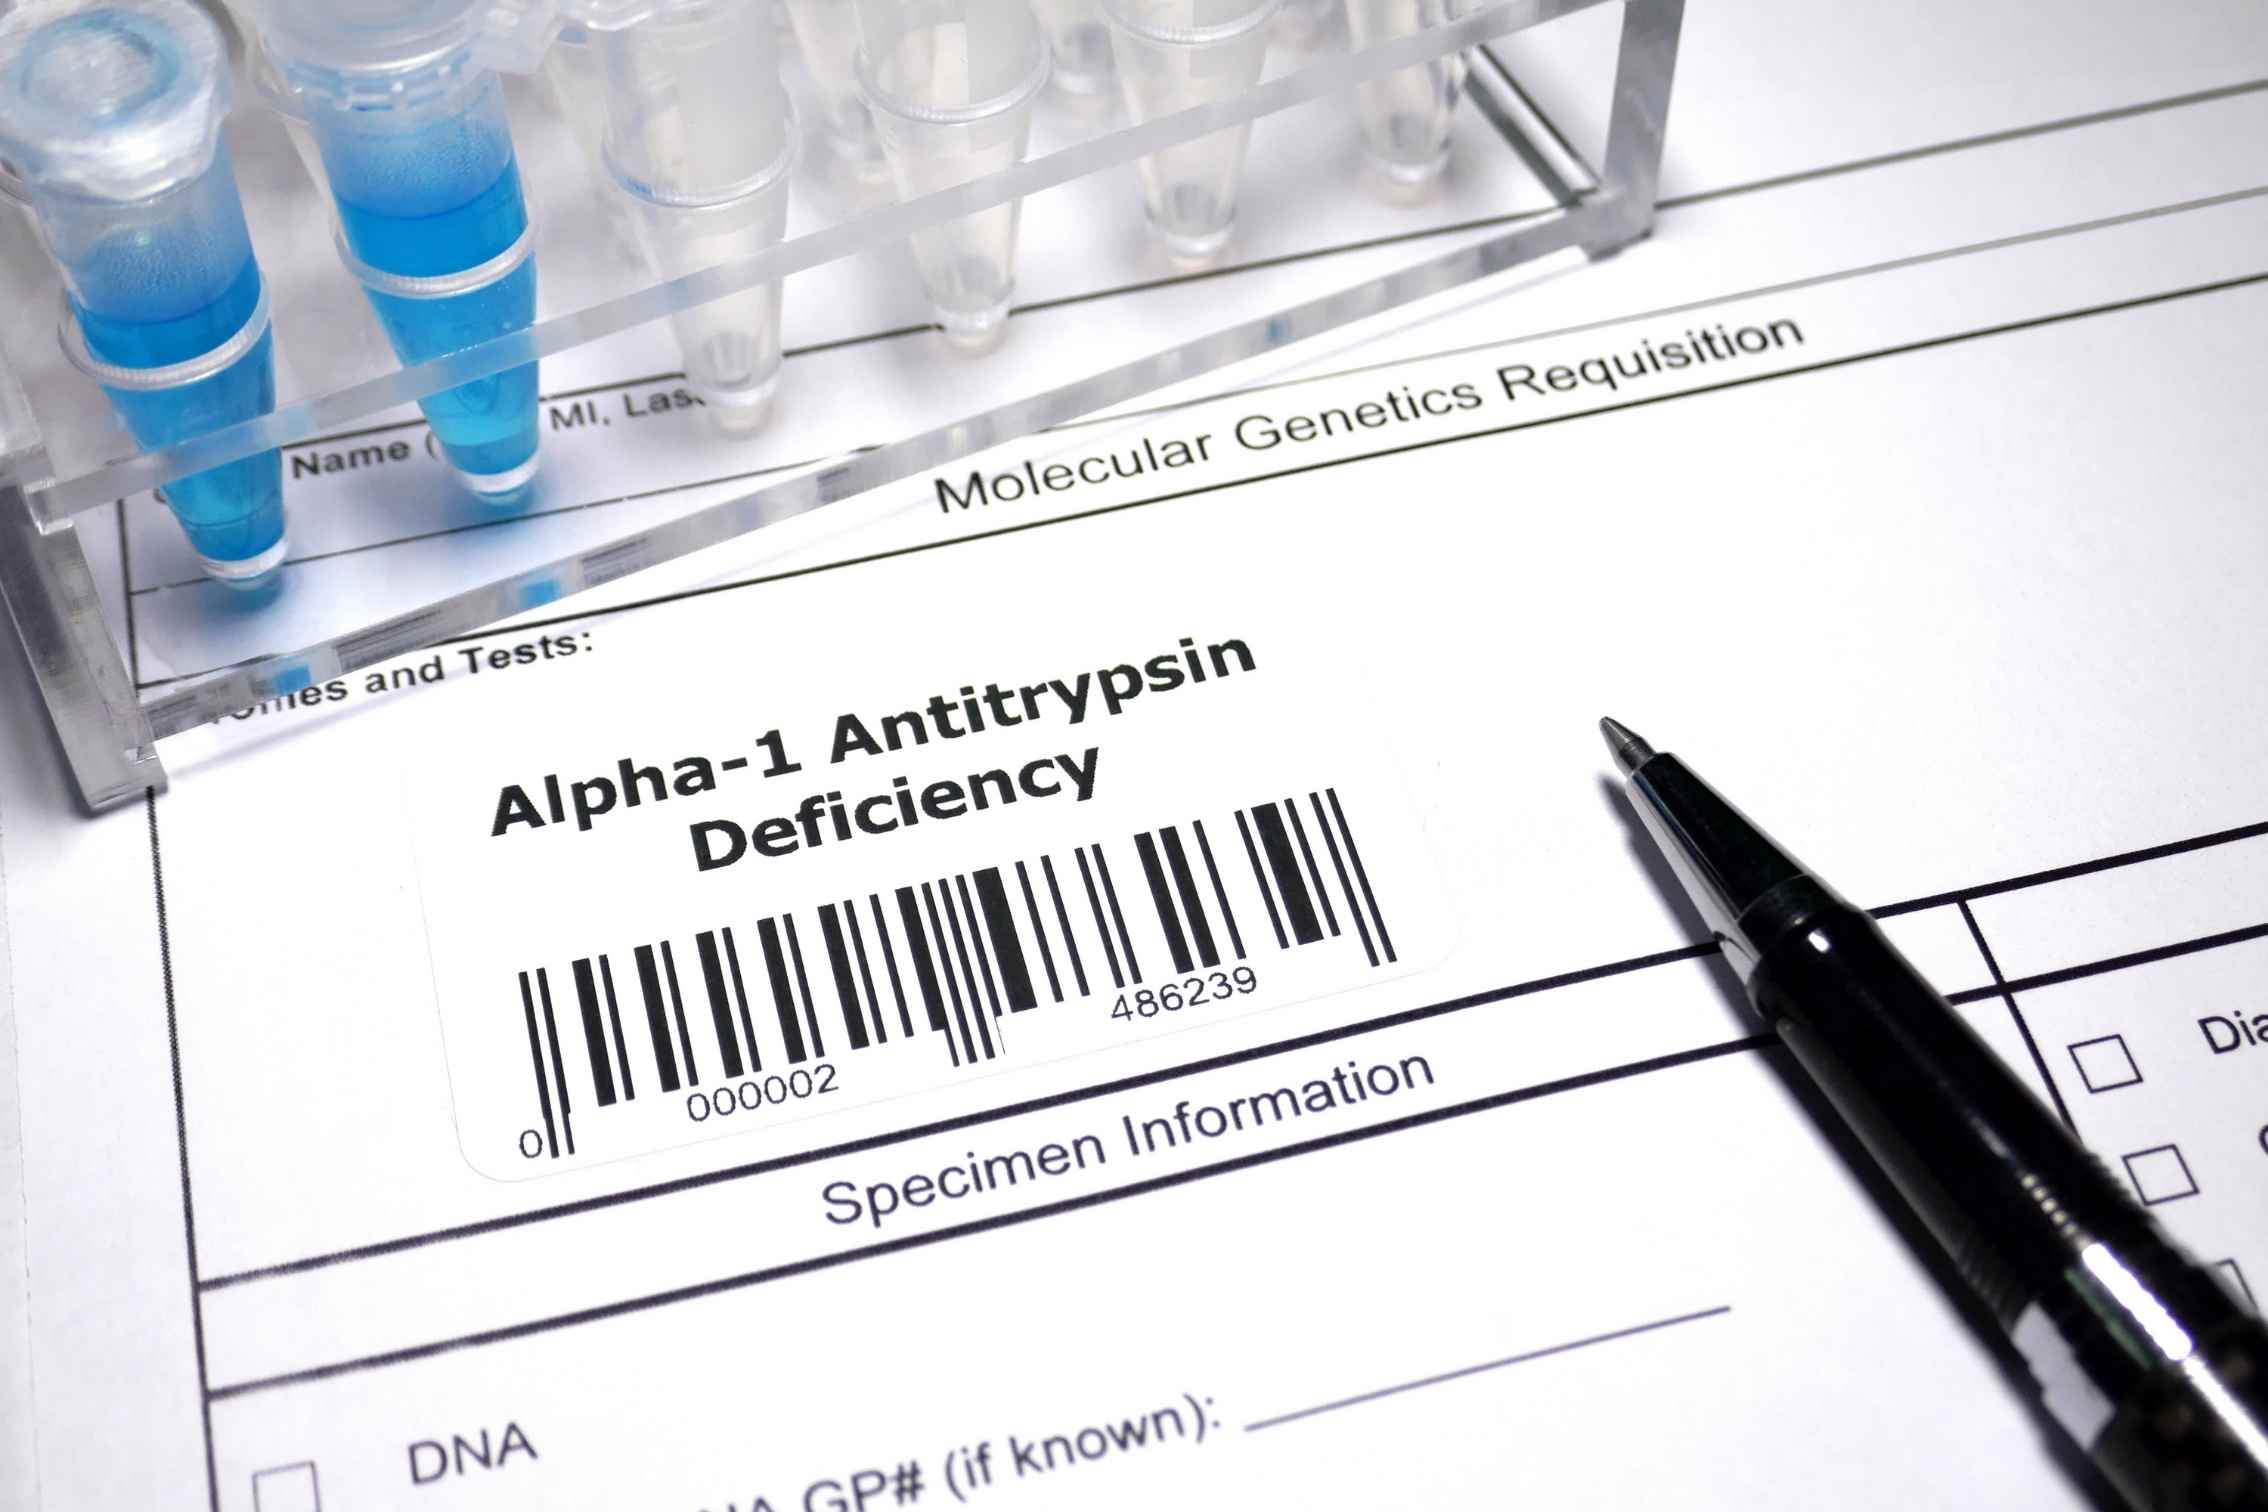 Alpha-1 antitrypsin deficiency DNA test: